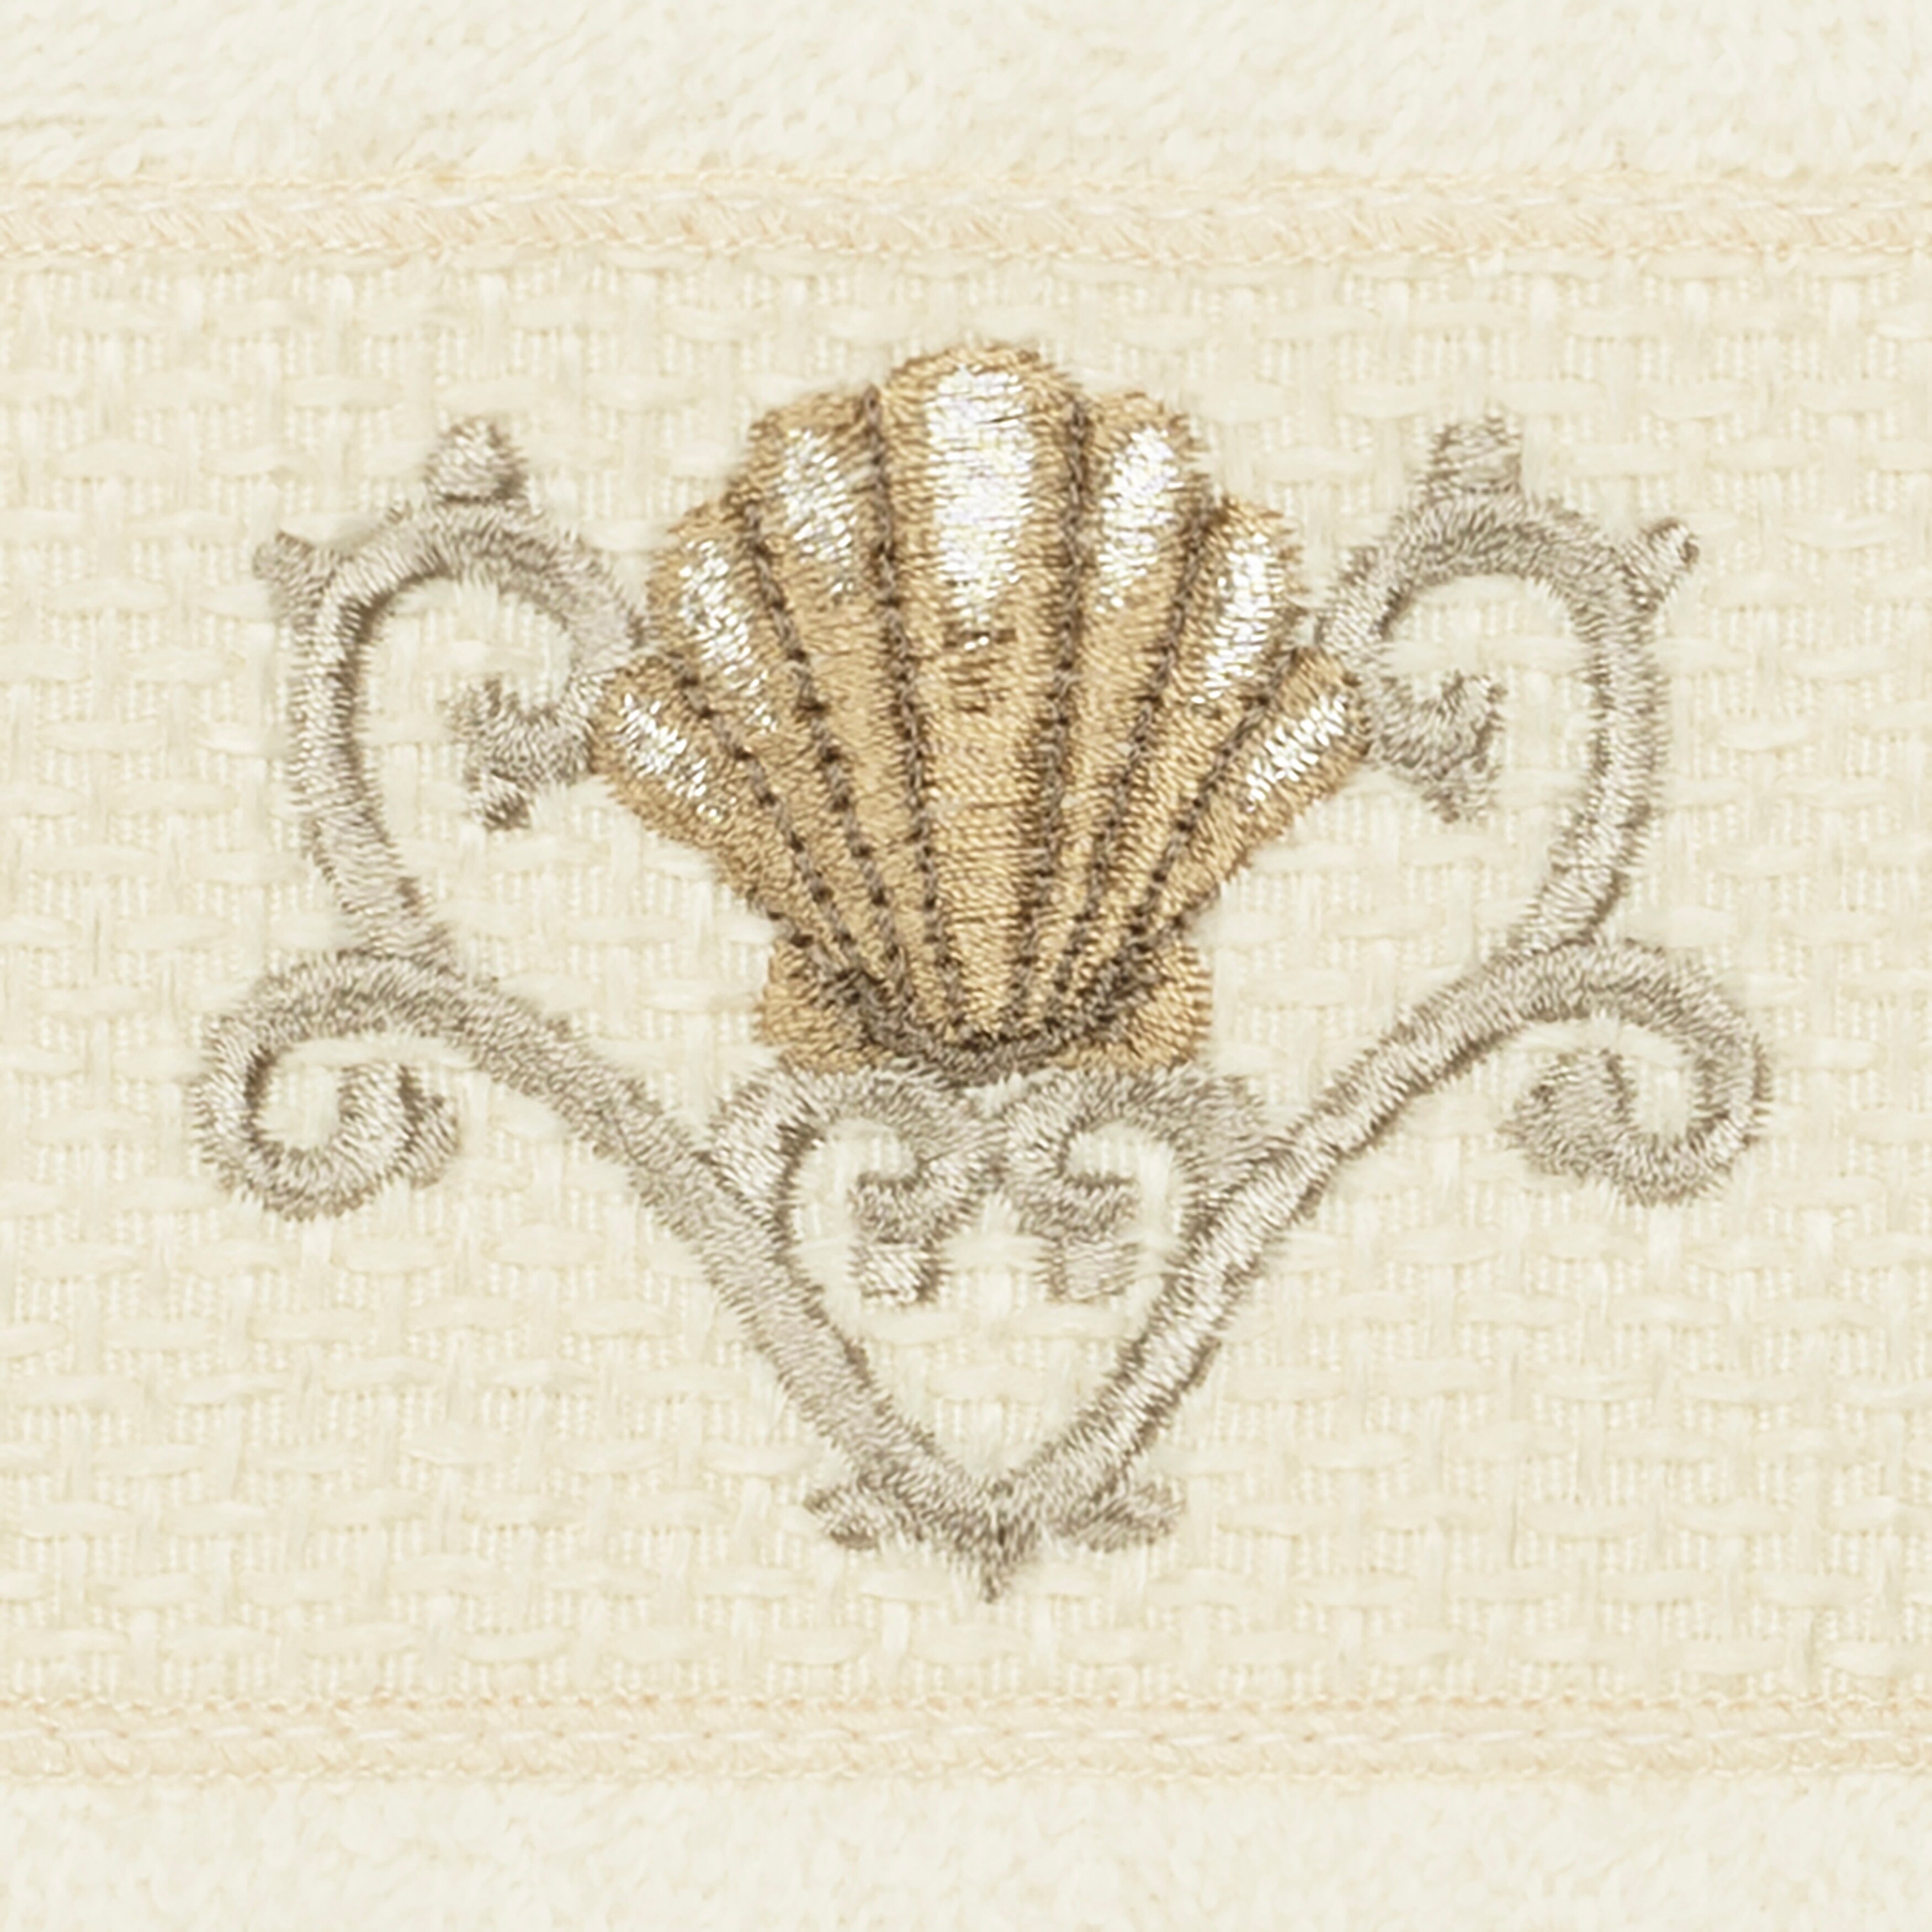 Victoria Embroidered Cotton Cream Bath Towel Set